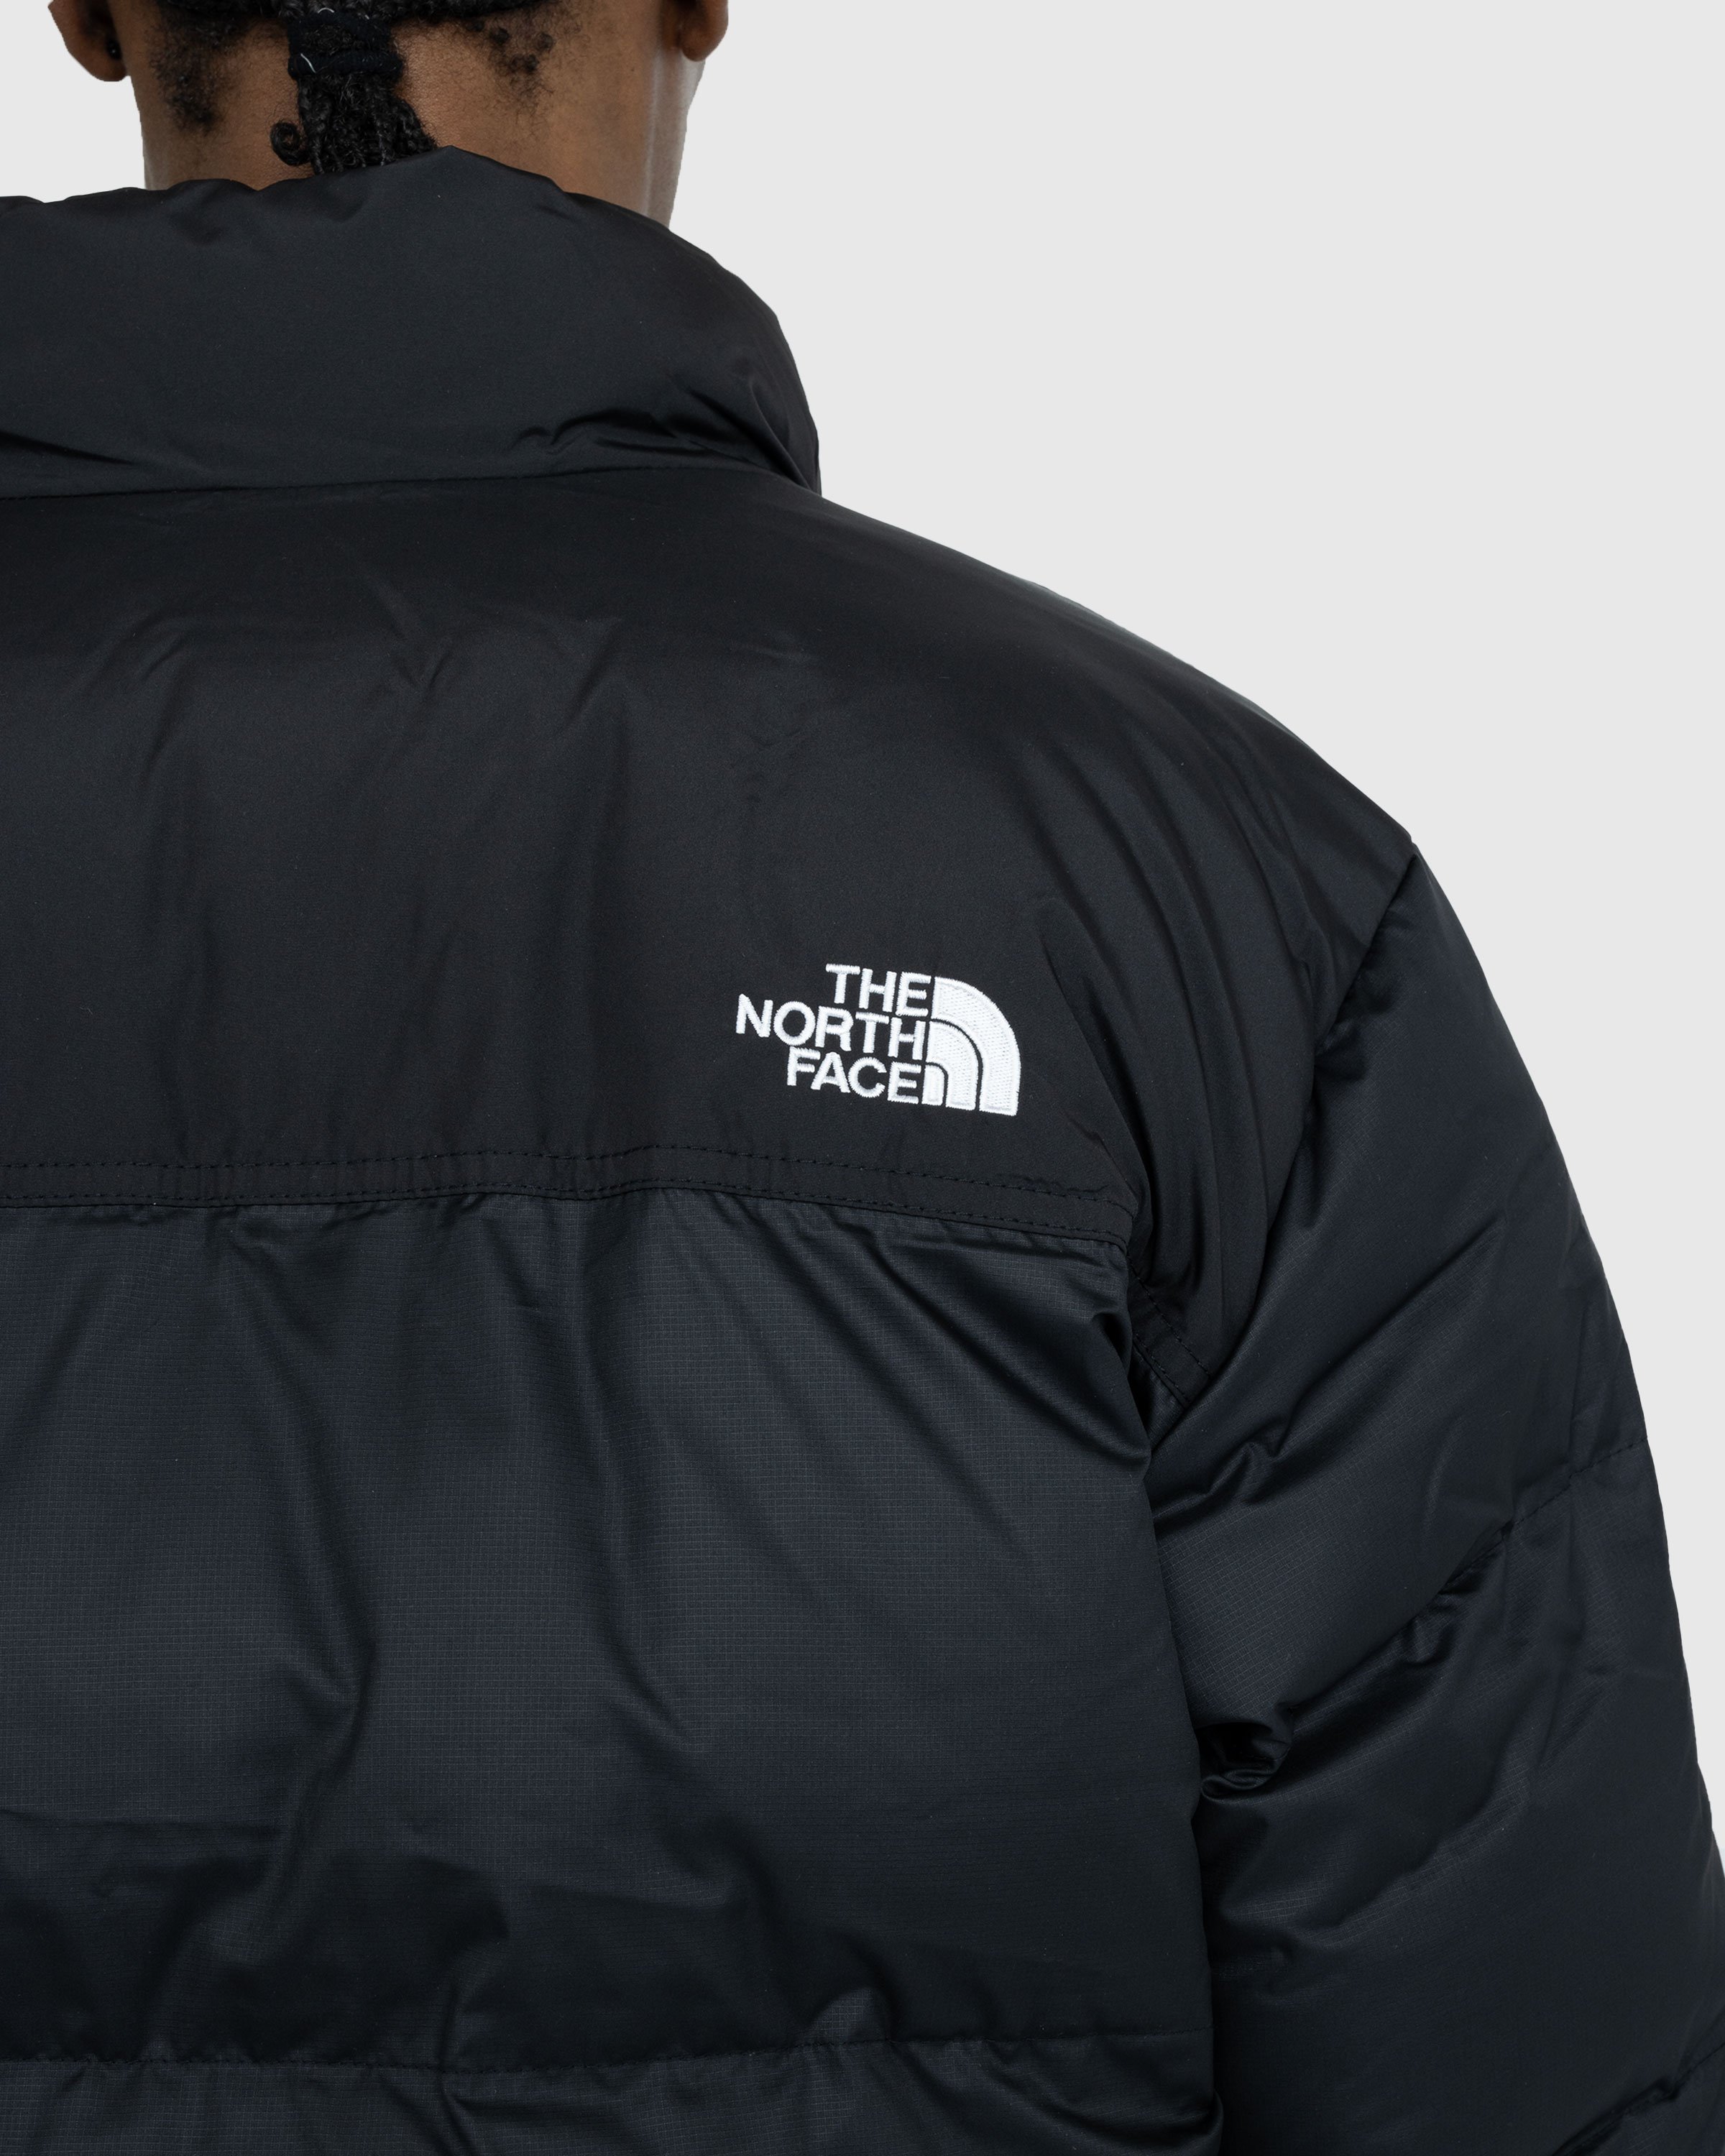 The North Face - Saikuru Jacket Black - Clothing - Black - Image 5